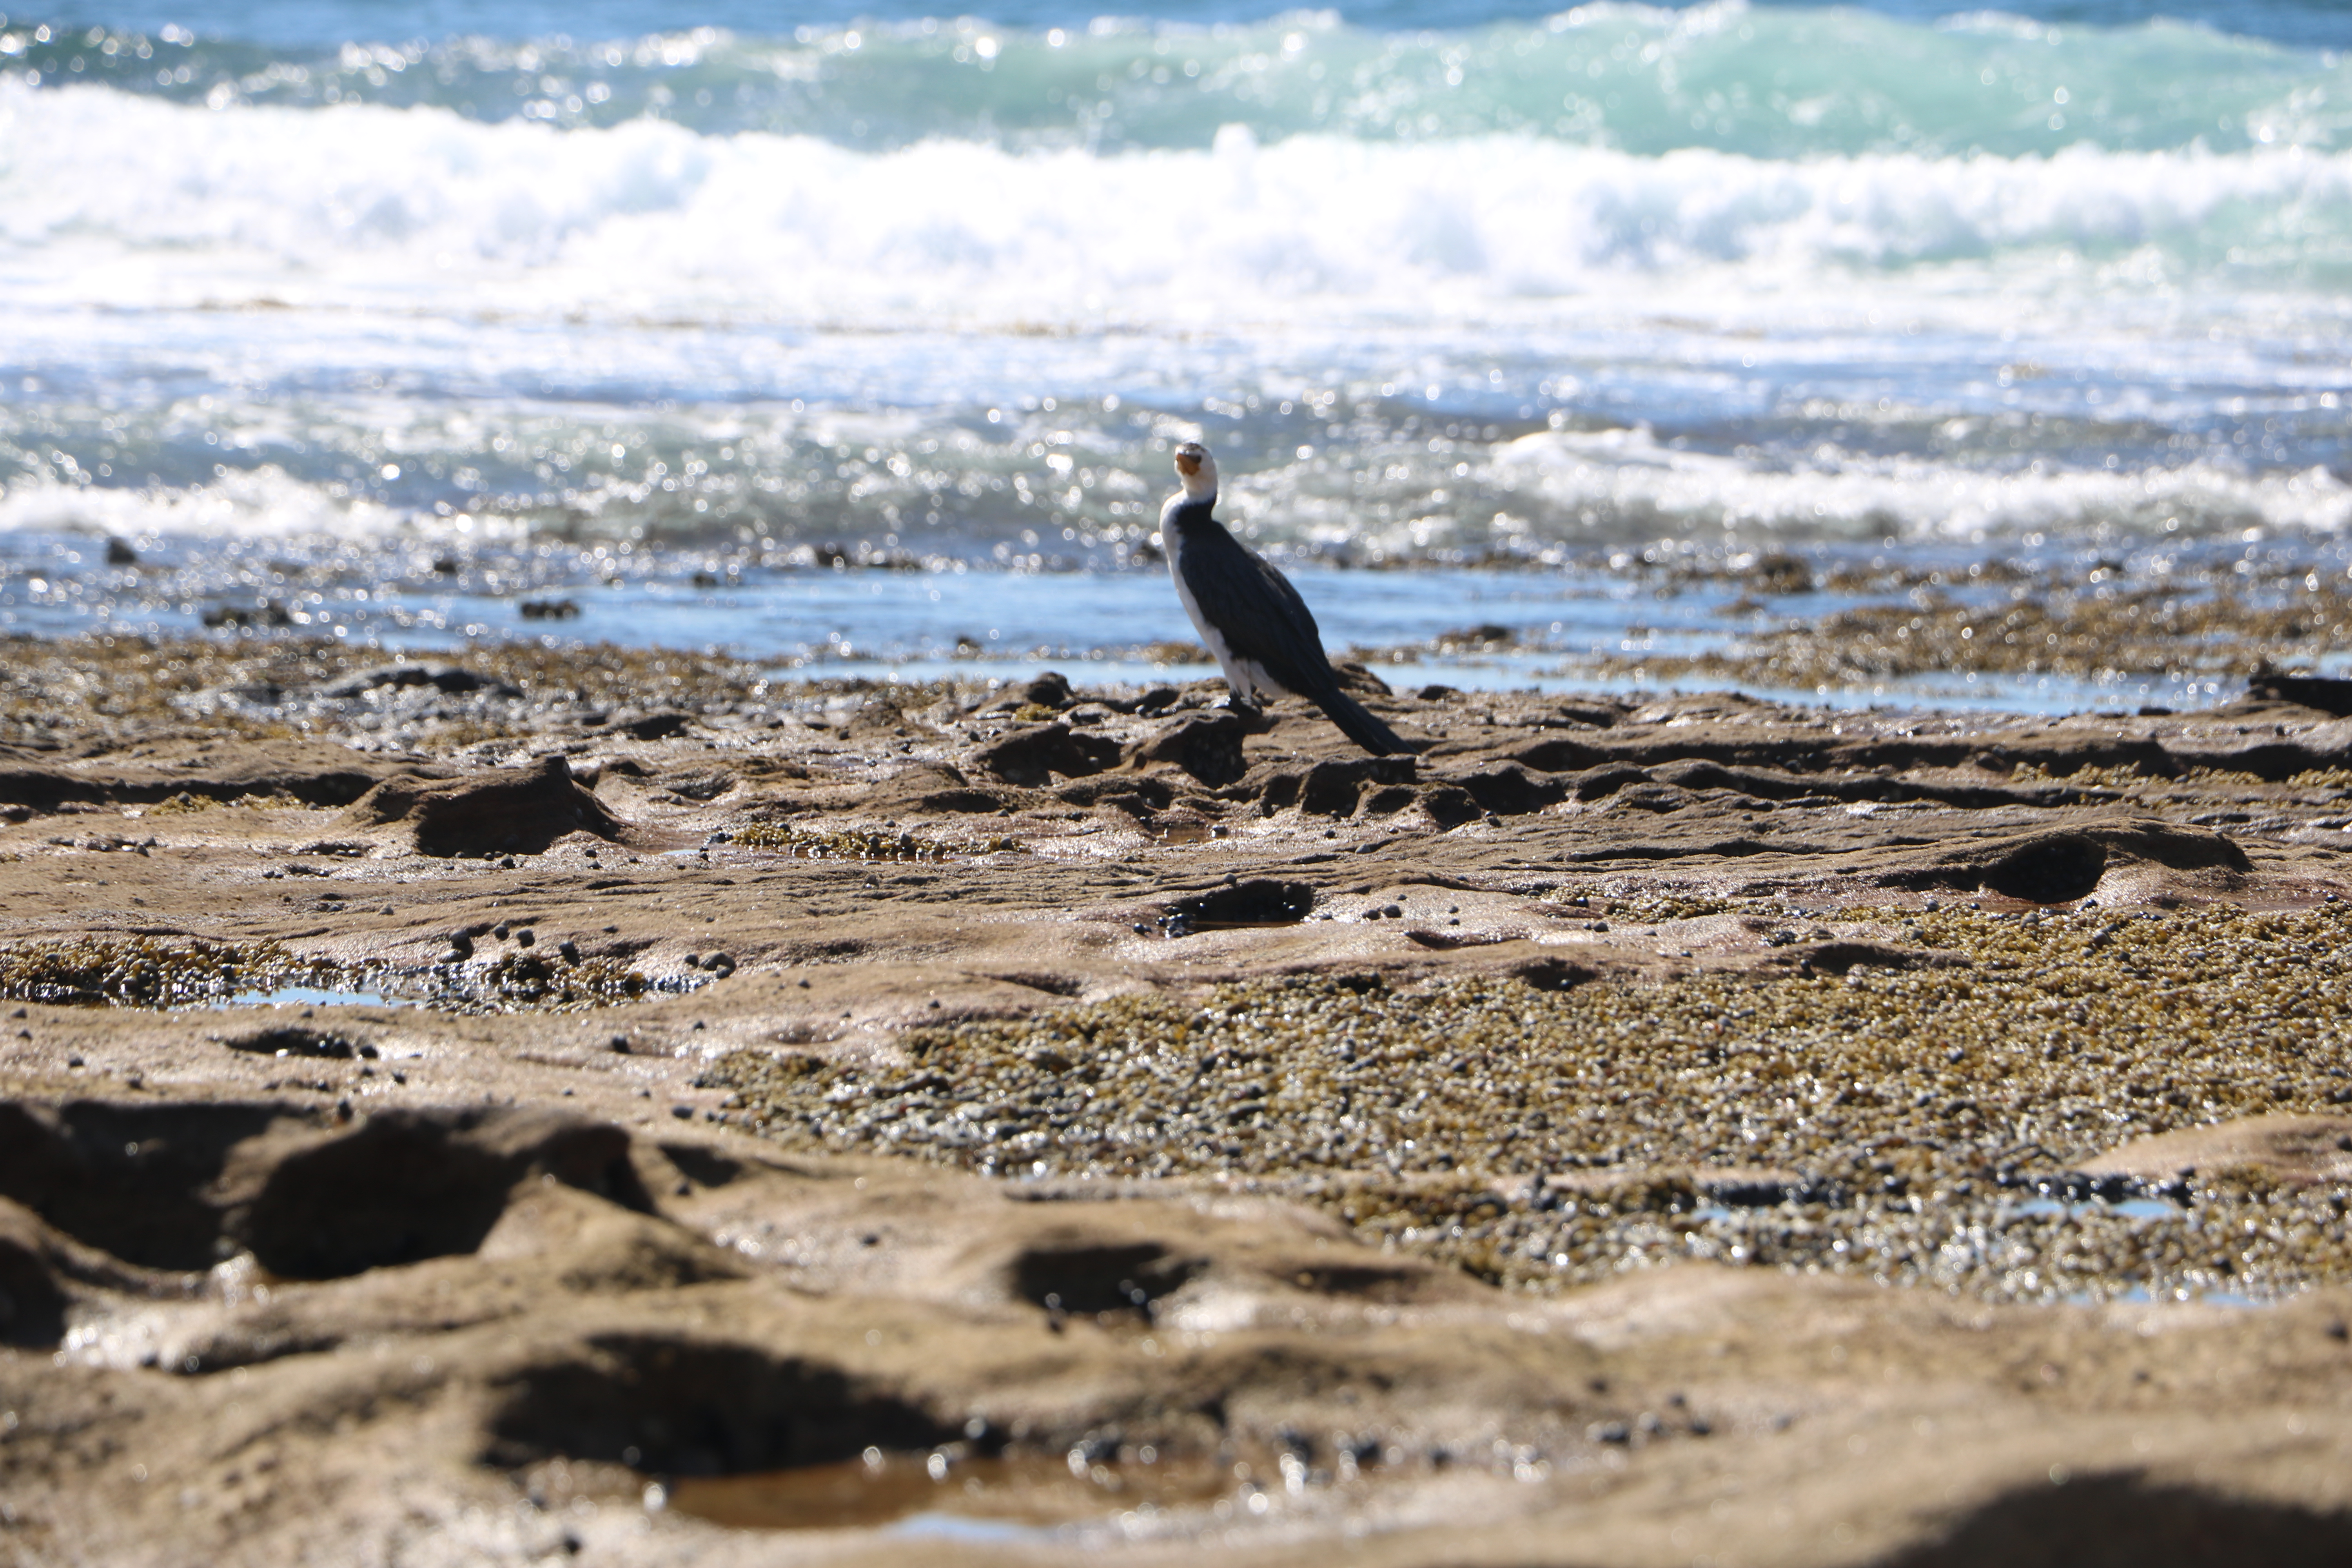 pied cormorant on rock platform